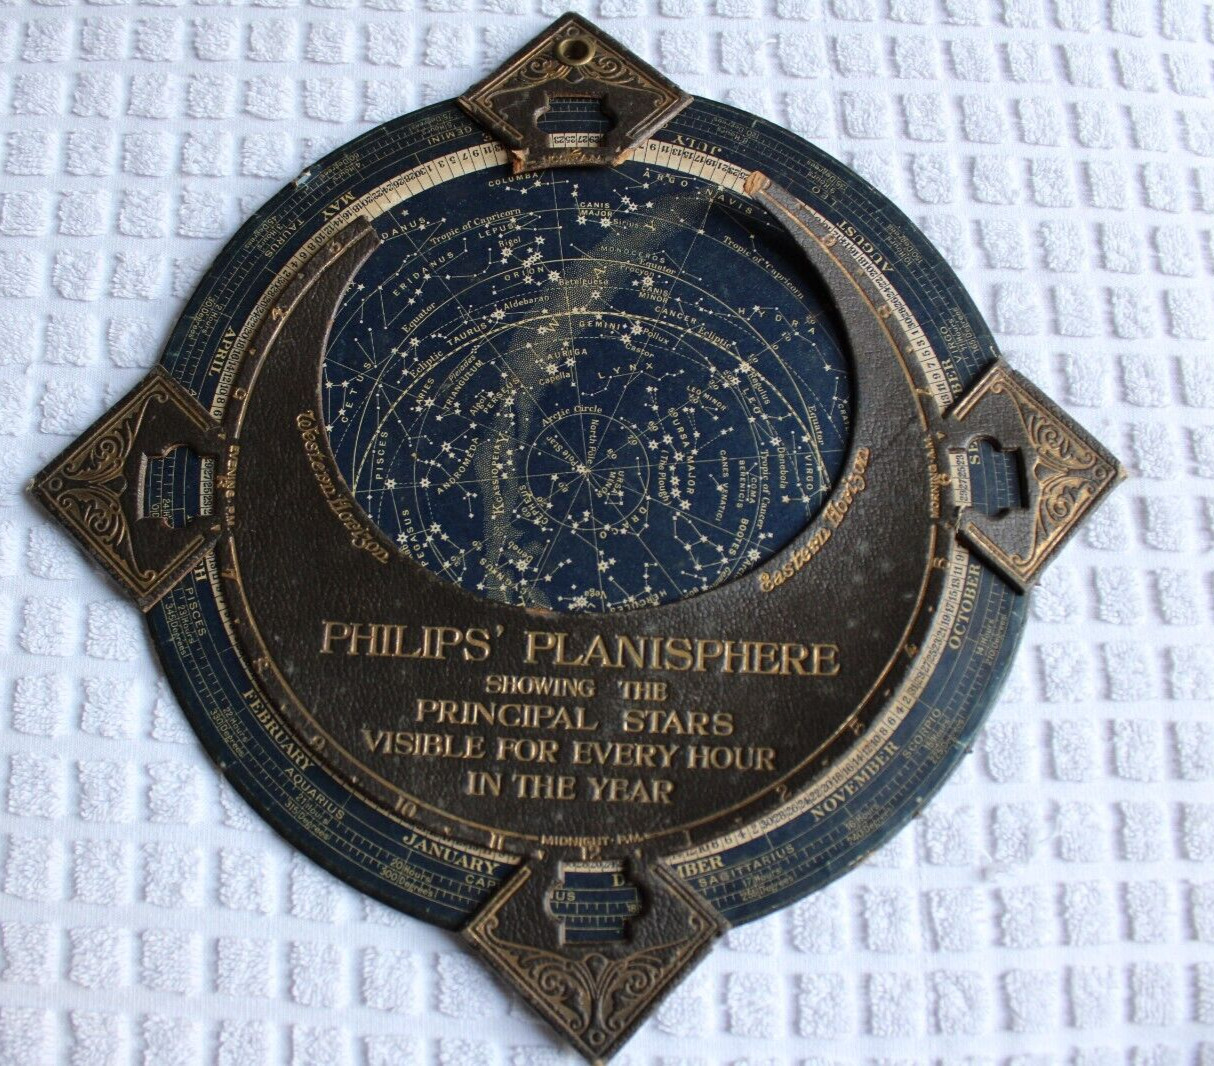 Philips' Planisphere Showing the Principal Stars